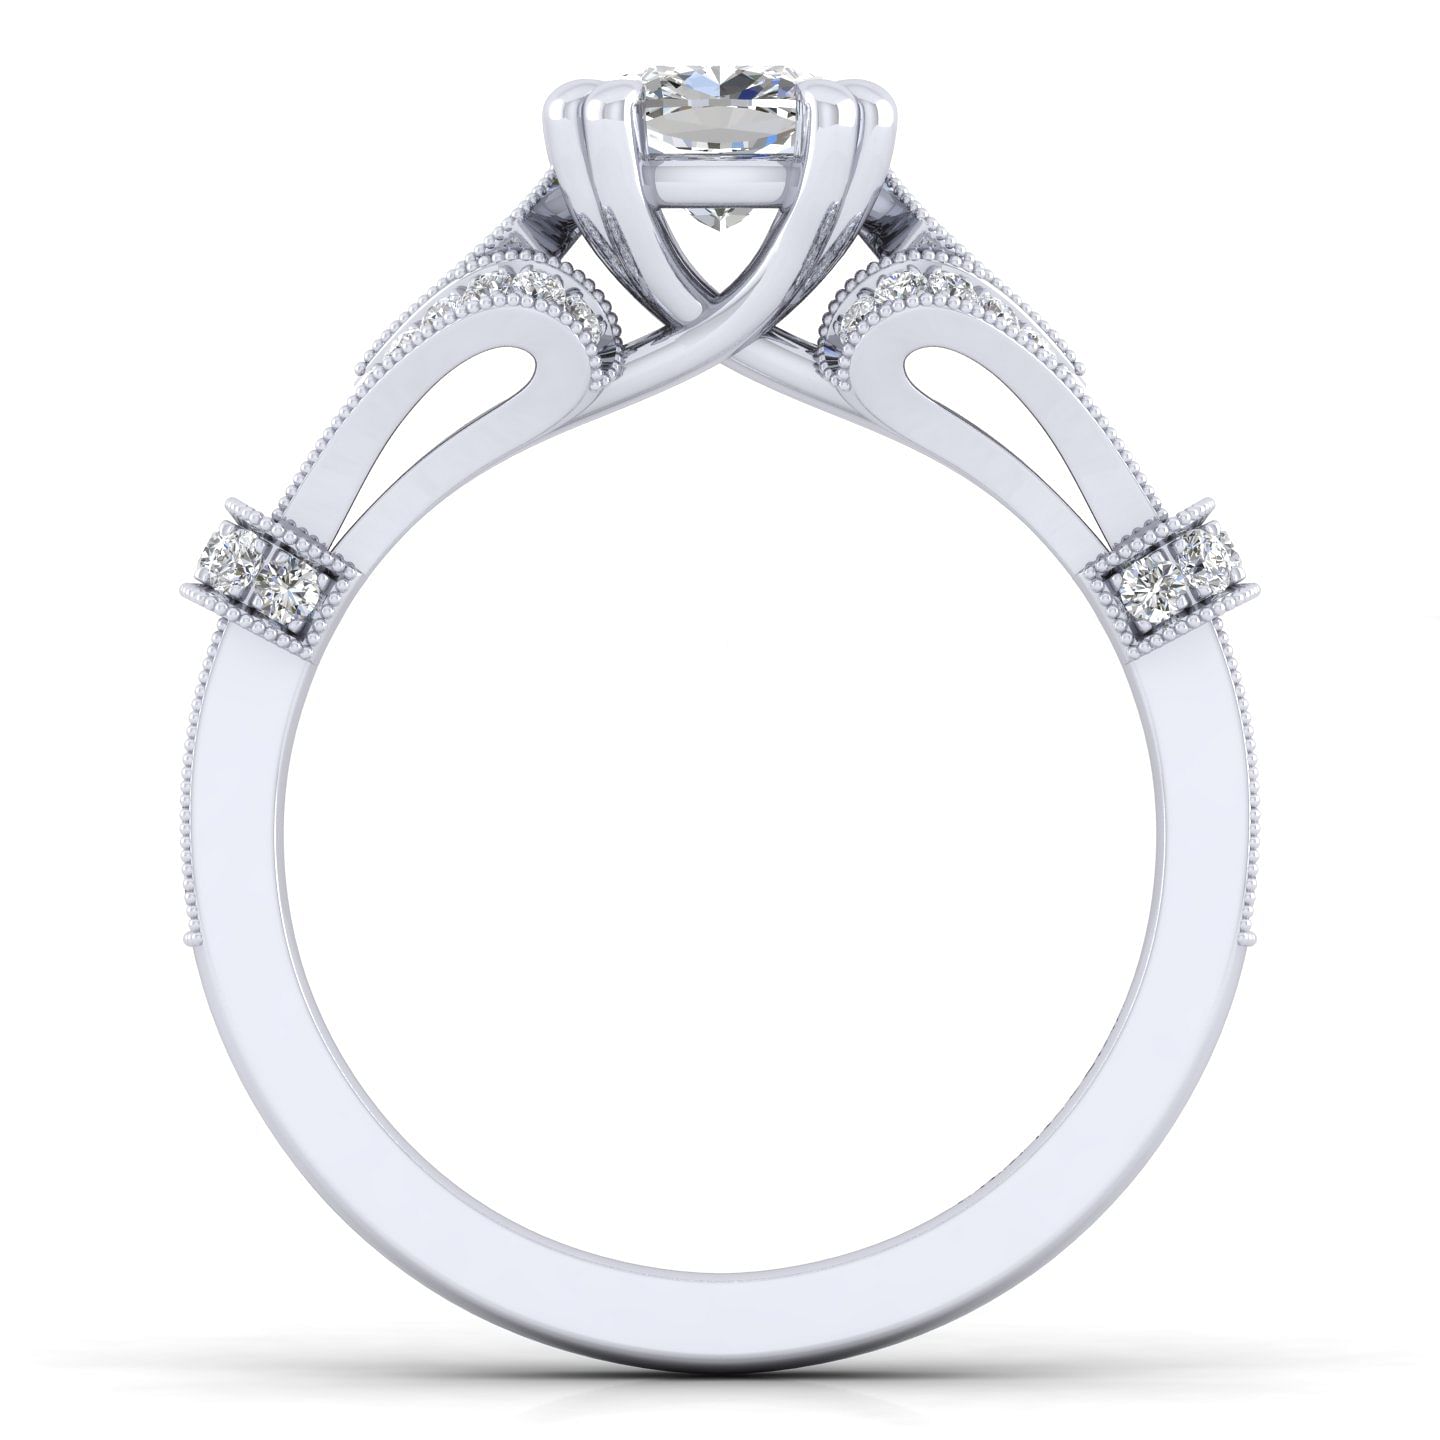 Vintage Inspired 14K White Gold Split Shank Cushion Cut Diamond Engagement Ring